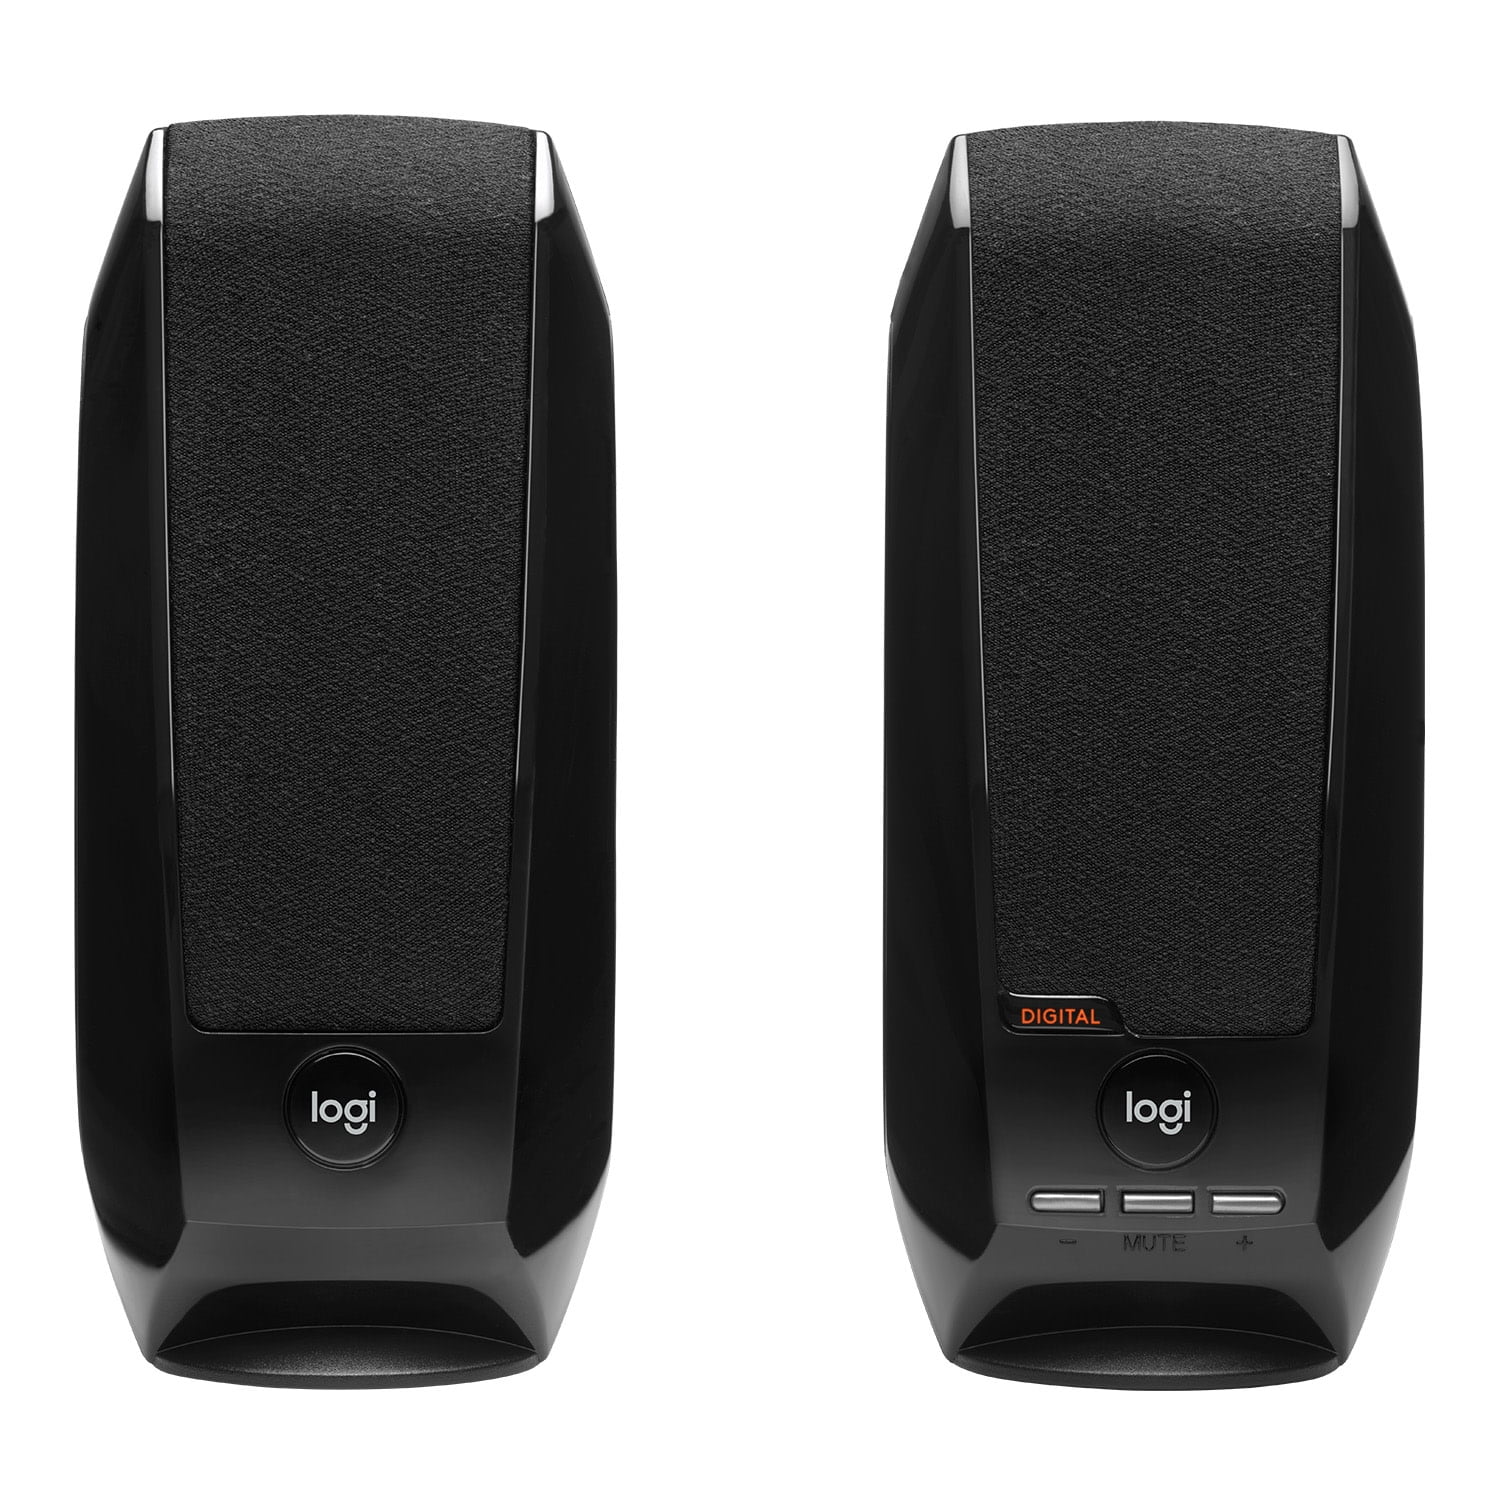 Headphone jack S-120 Black 980-000012 US Wired Logitech PC Stereo Speakers 